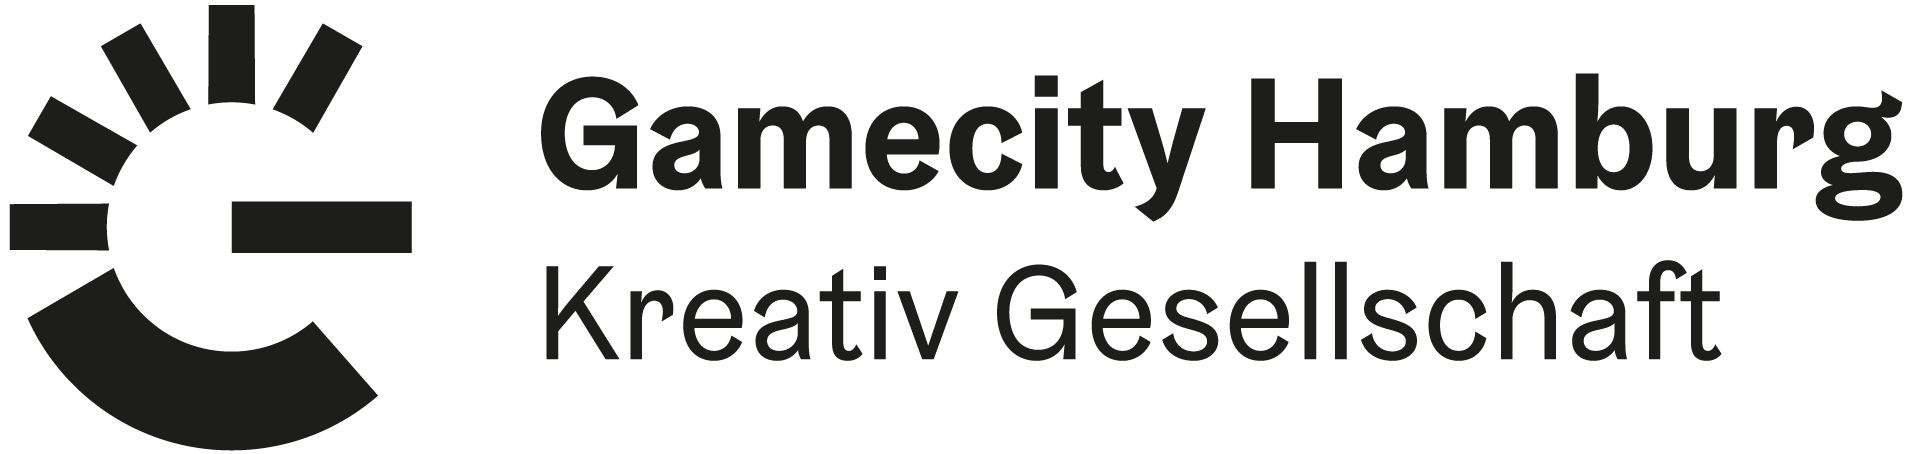 220603_Gamecity_Hamburg_Logo_black.png logo